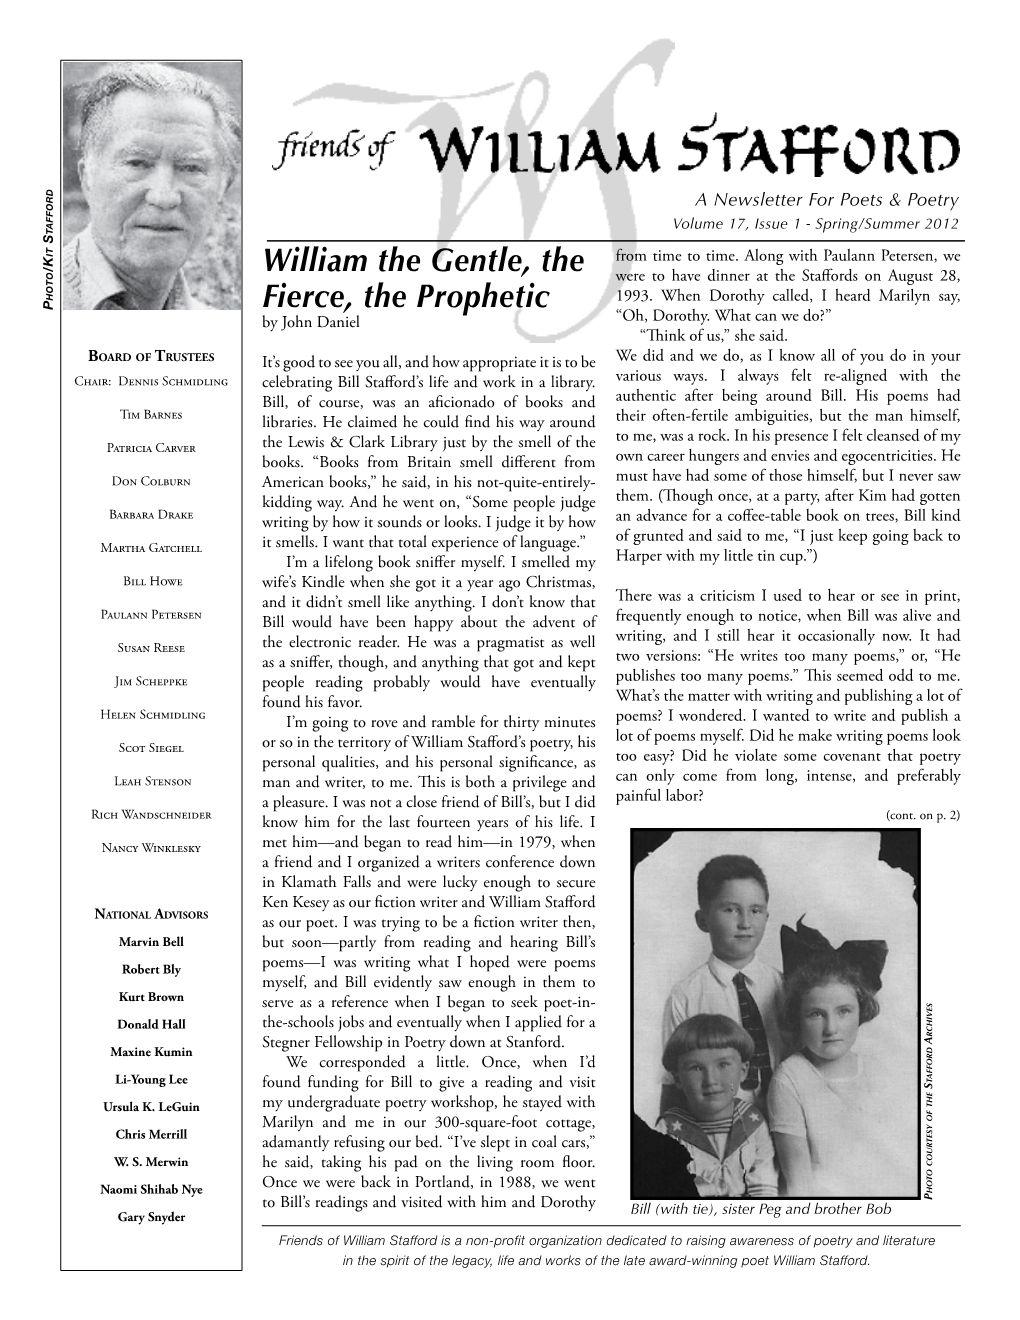 On the Spirit of William Stafford